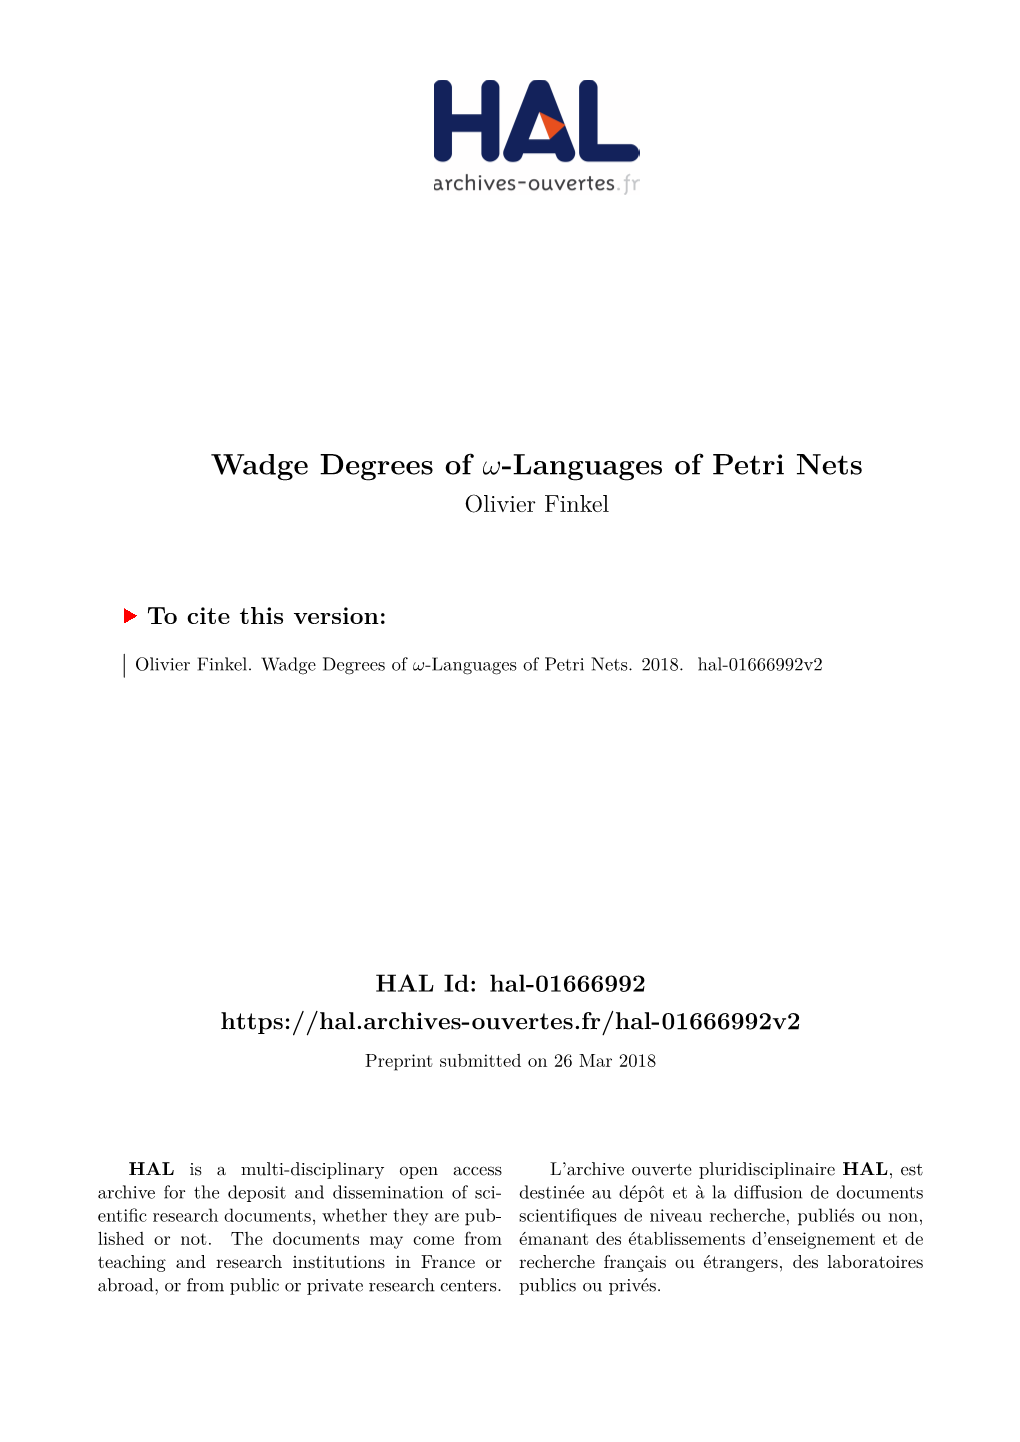 Wadge Degrees of Ω-Languages of Petri Nets Olivier Finkel